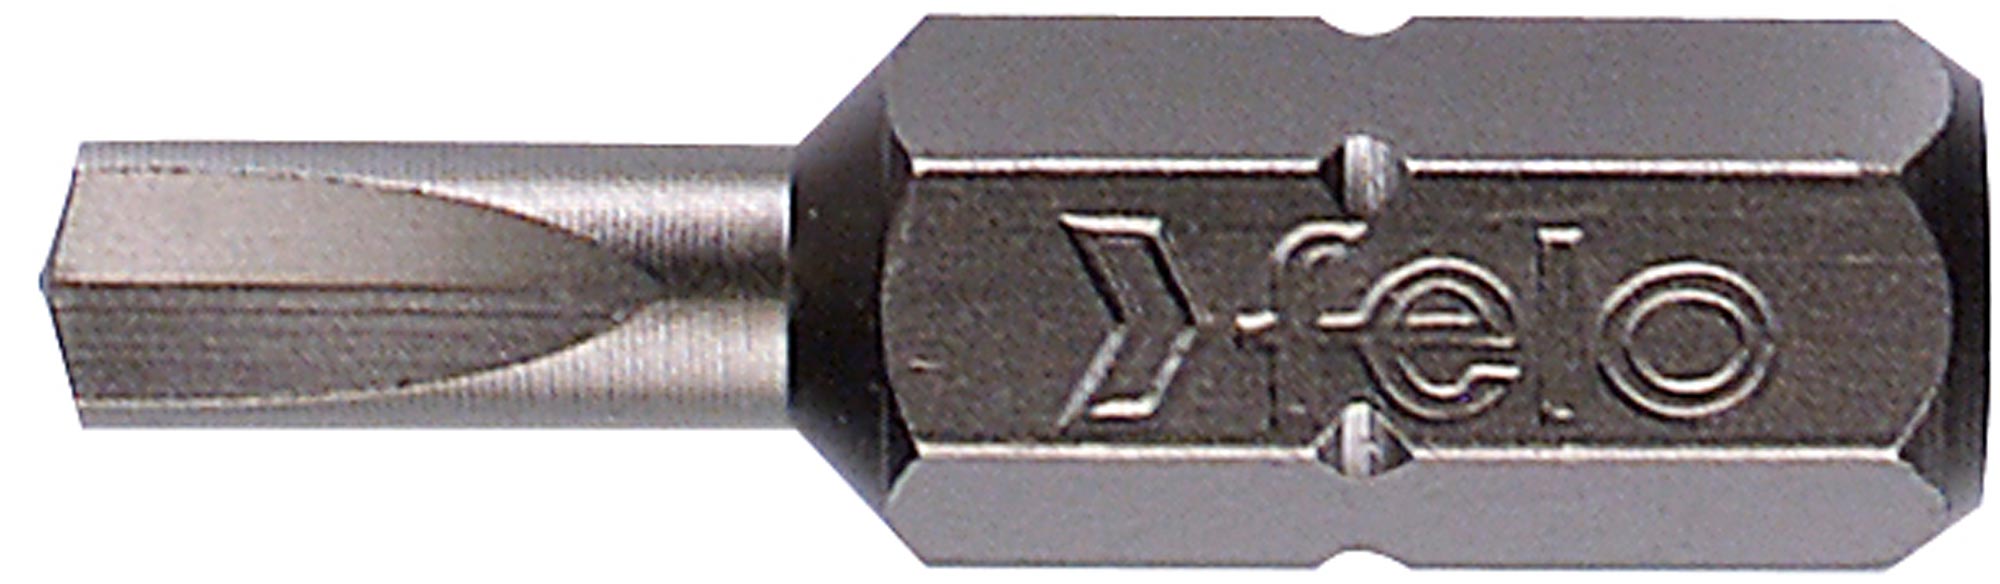 Felo Industrie Bit C 6,3 Clutch 5|32 Zoll x 25 mm - VE 10 Stück Clutch Schrauben Bit - Industrie Serie (FL-02893010-VE10) Bild-01